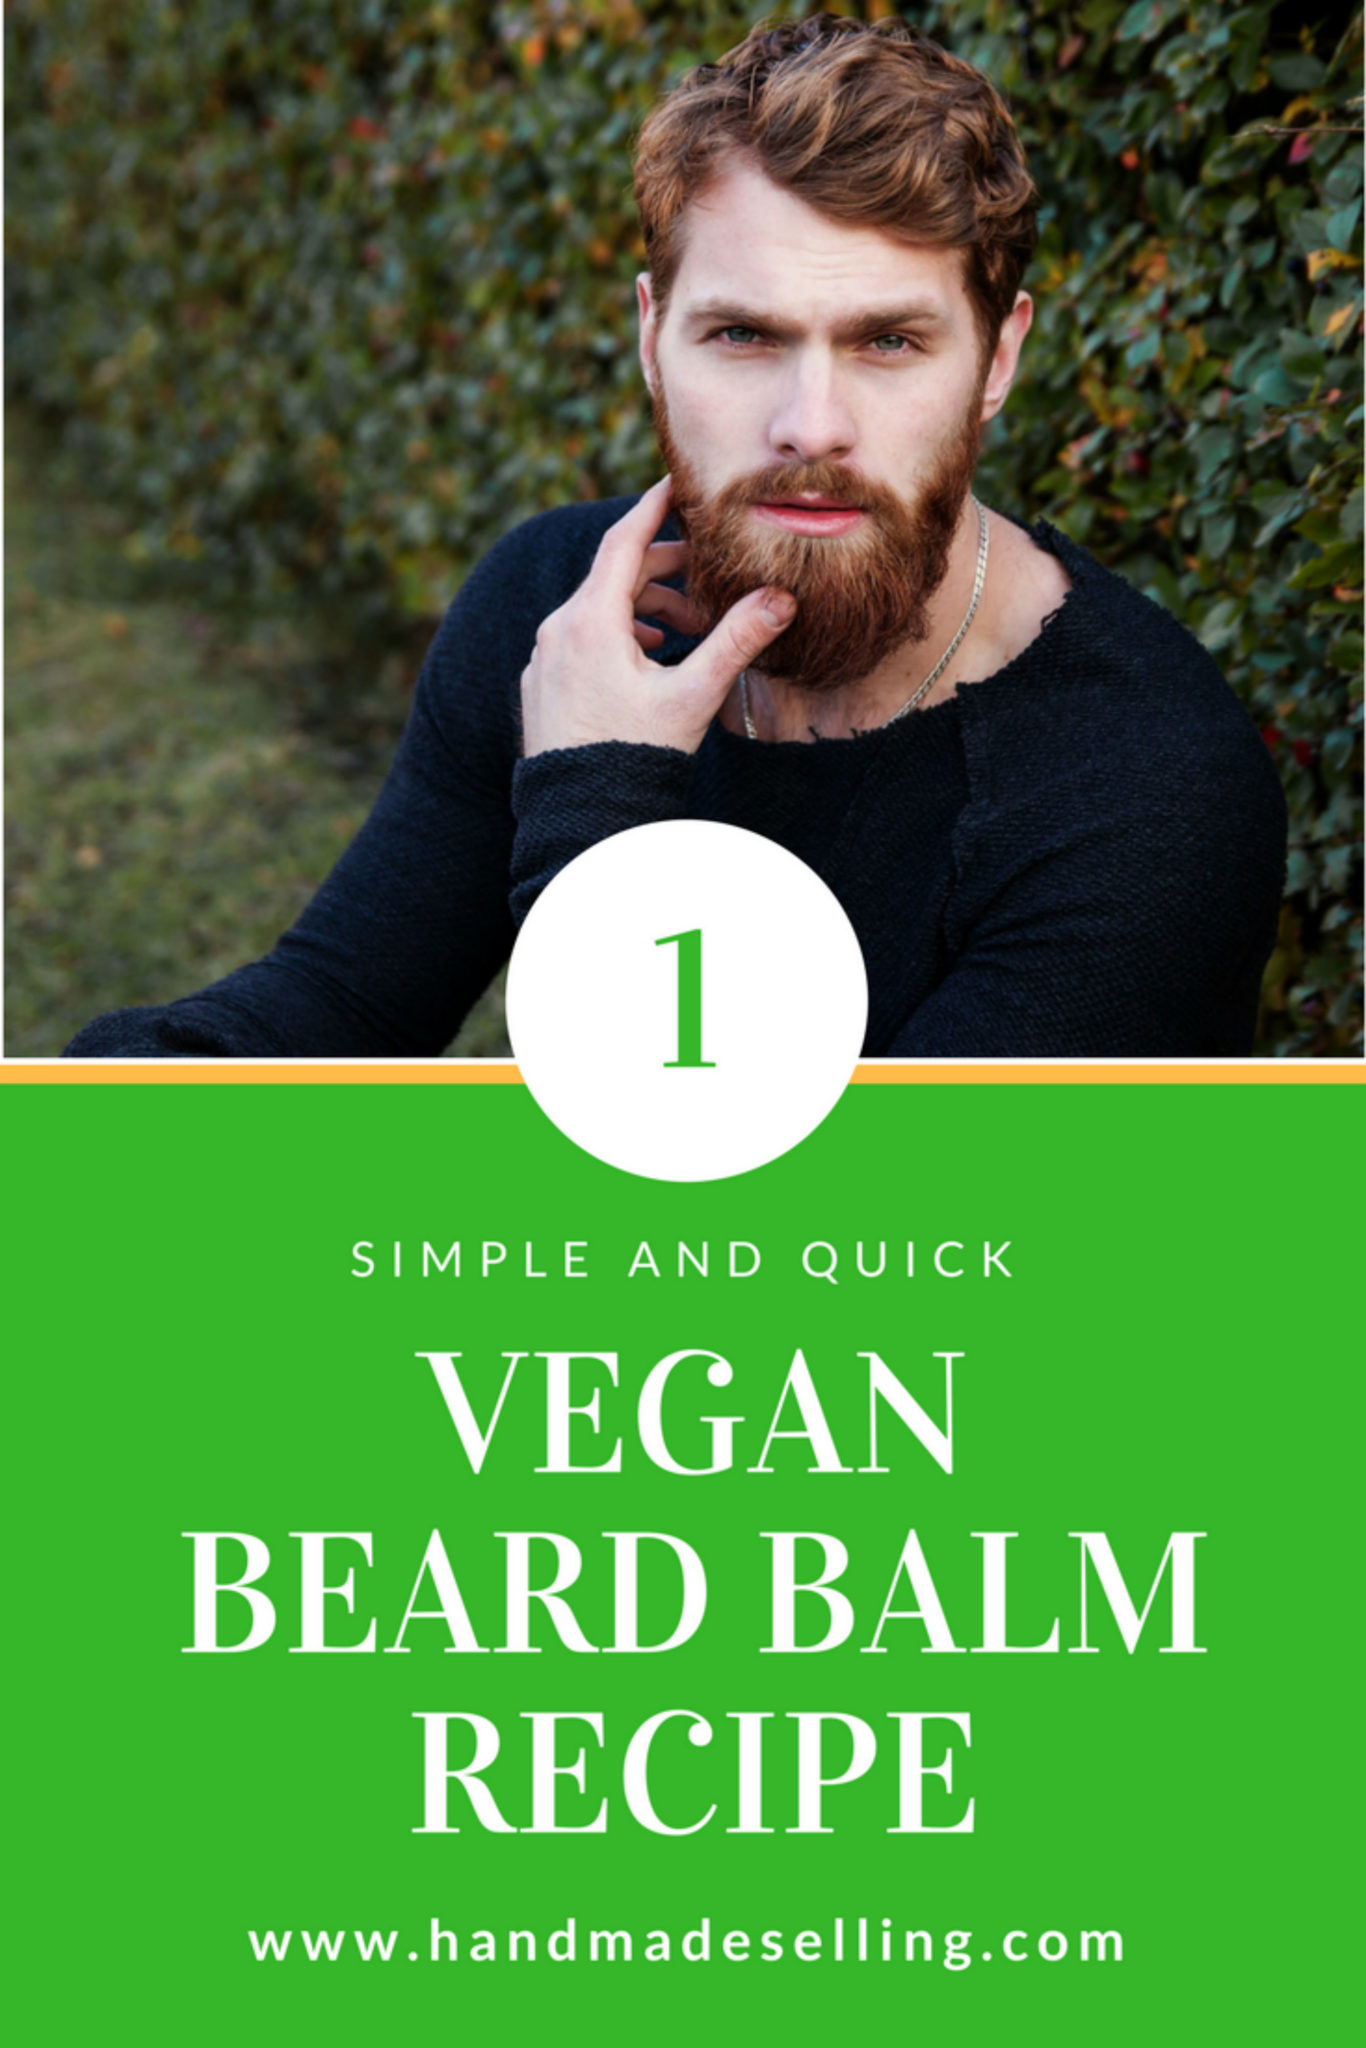 Vegan beard balm recipe for the dapper